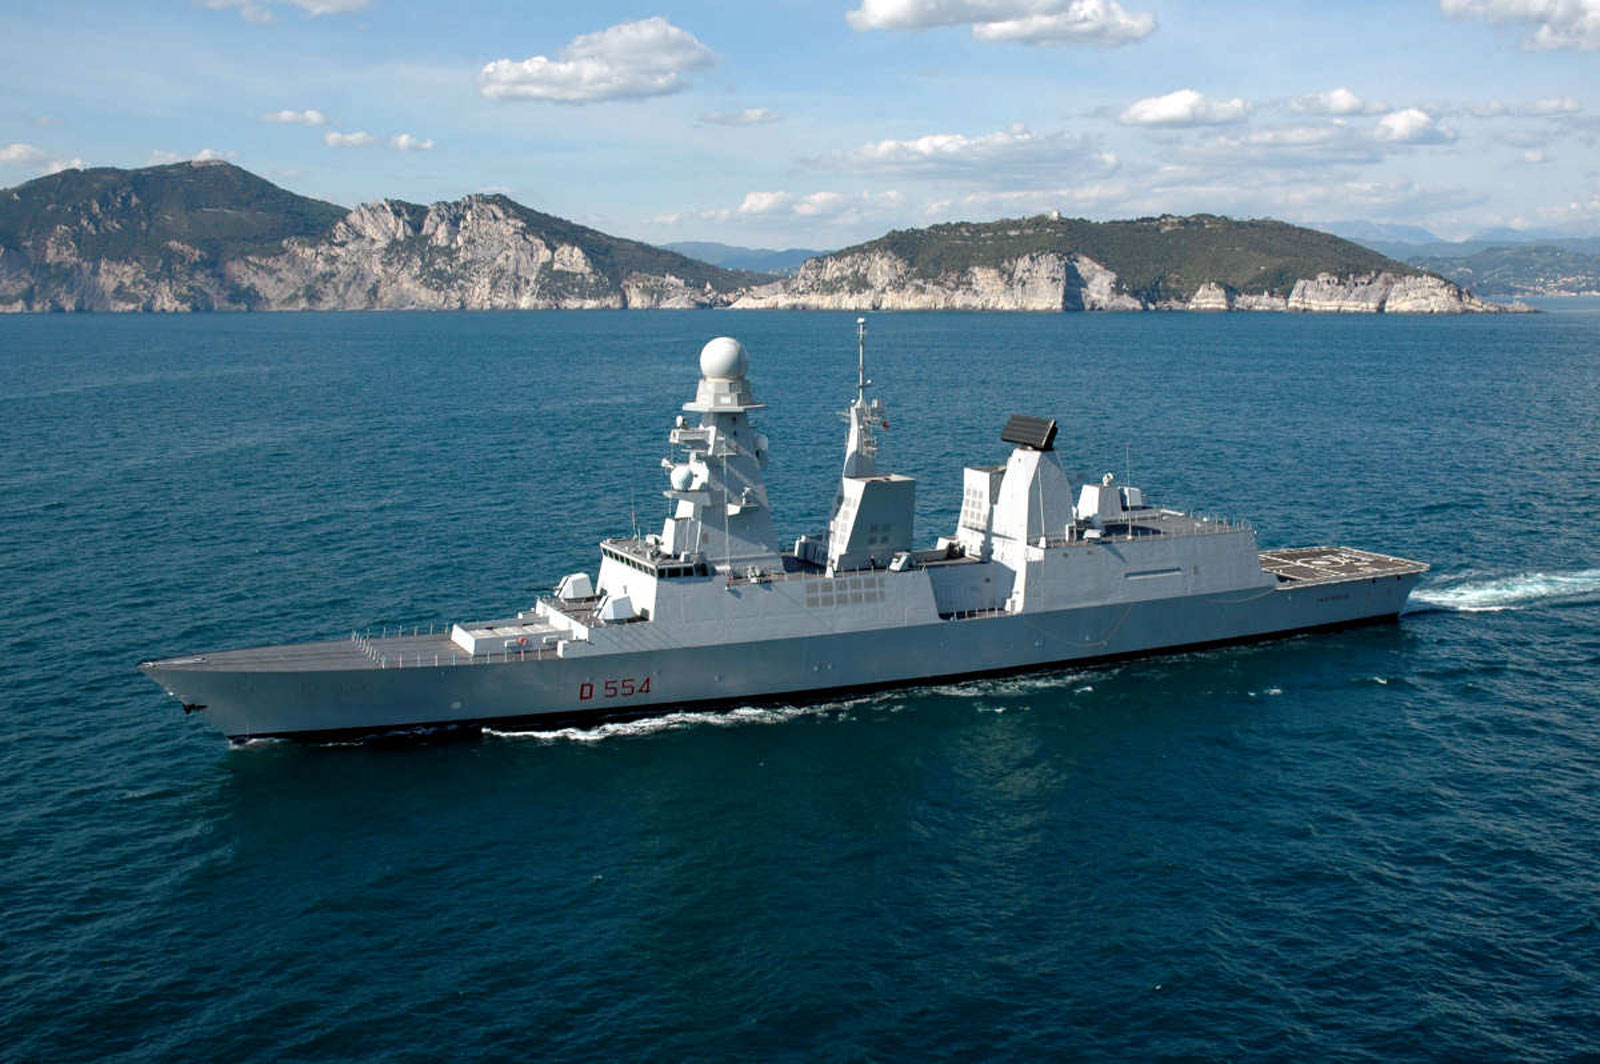 El buque militare Caio Duilio cerca de la costa - marina.difesa.it